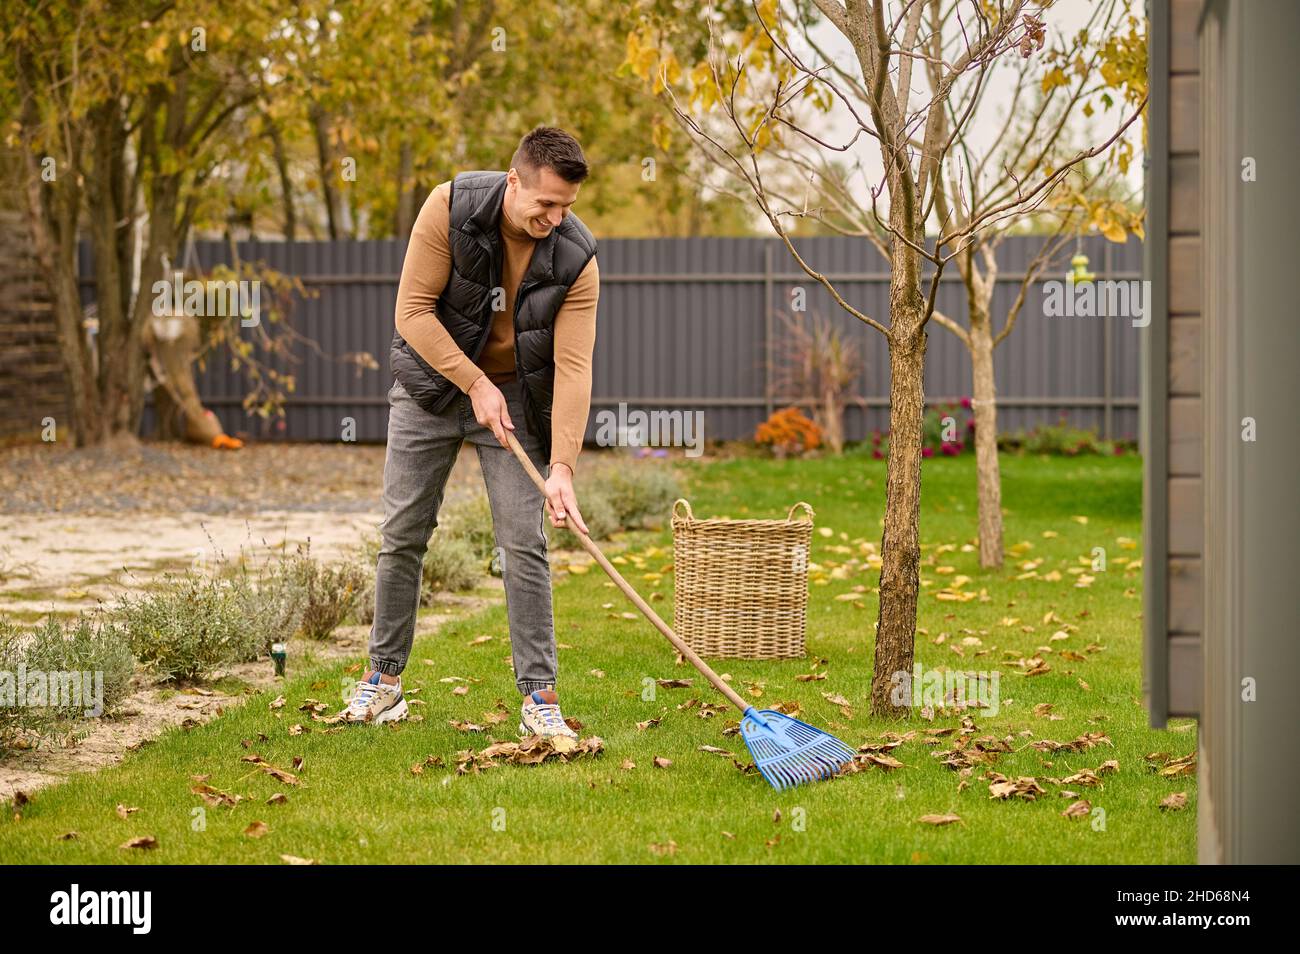 Joyful man shoveling leaves with garden tools Stock Photo